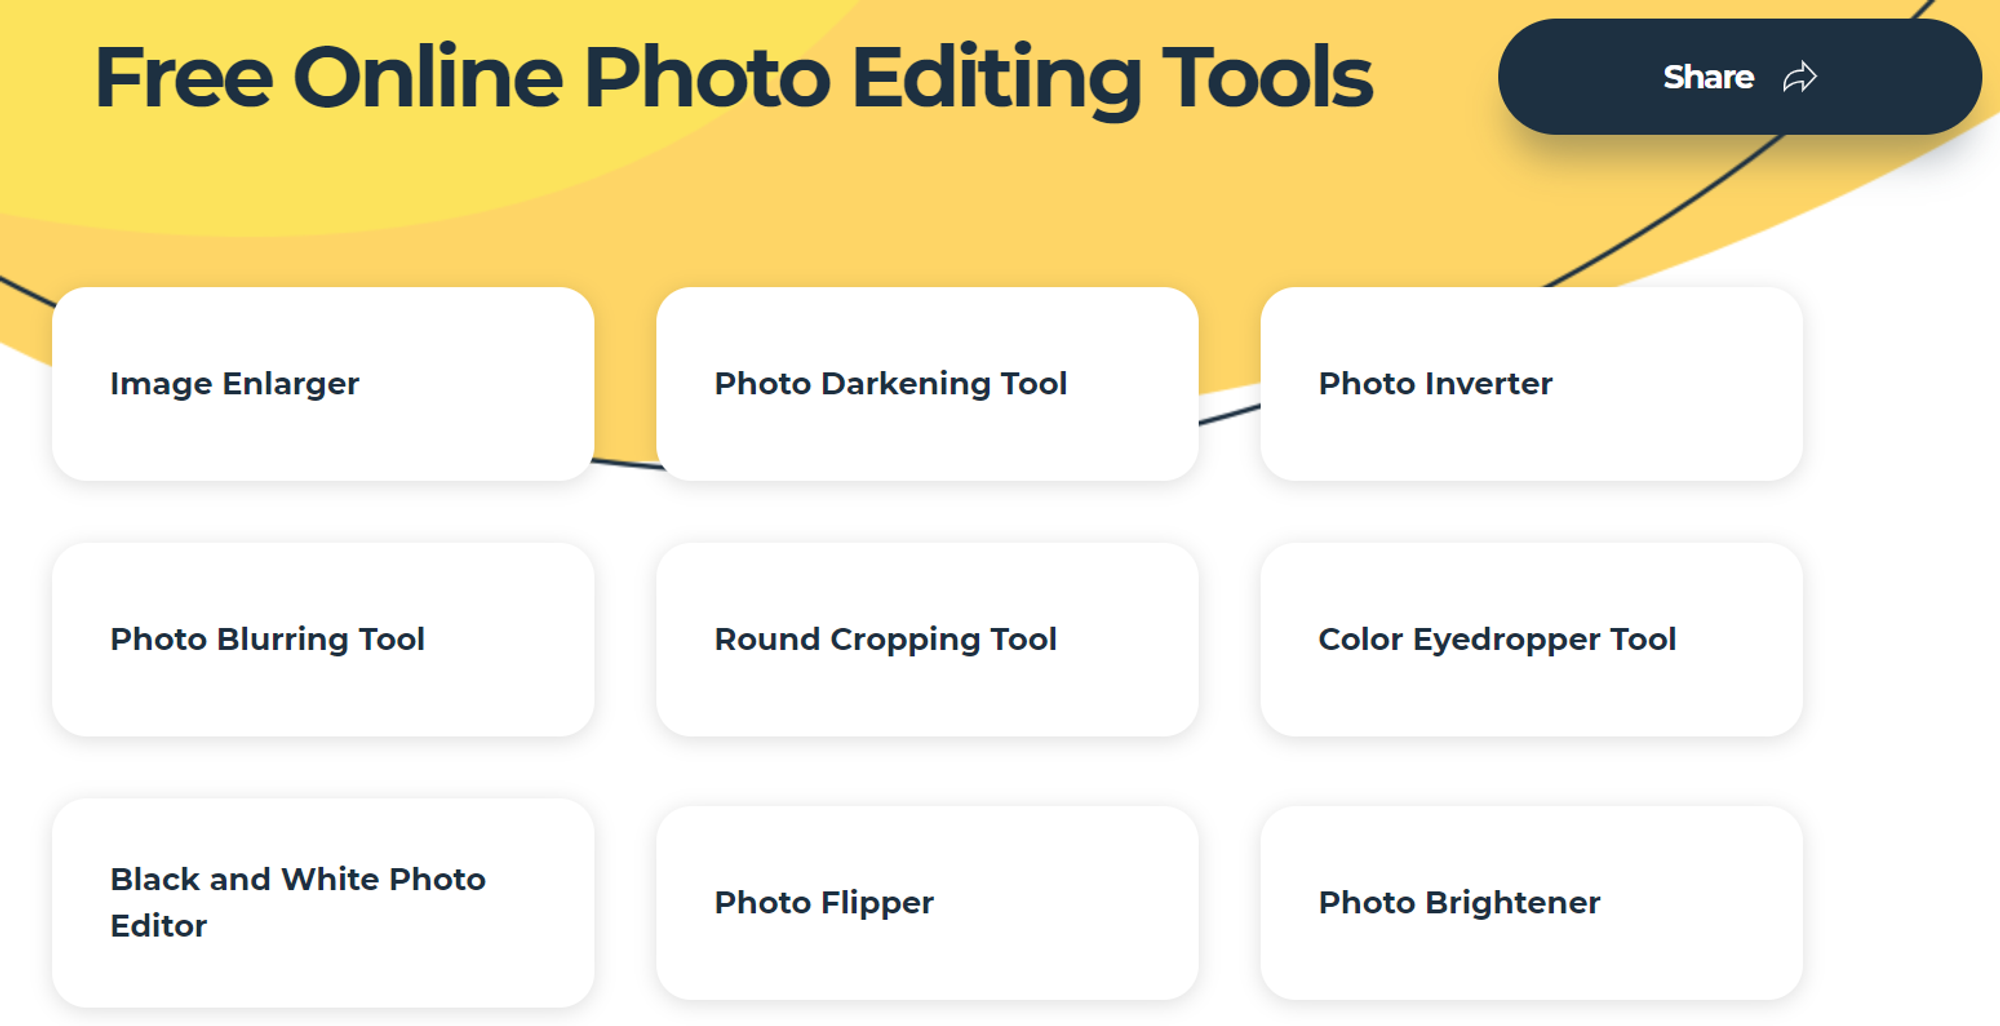 Free Online Photo Editing Tools